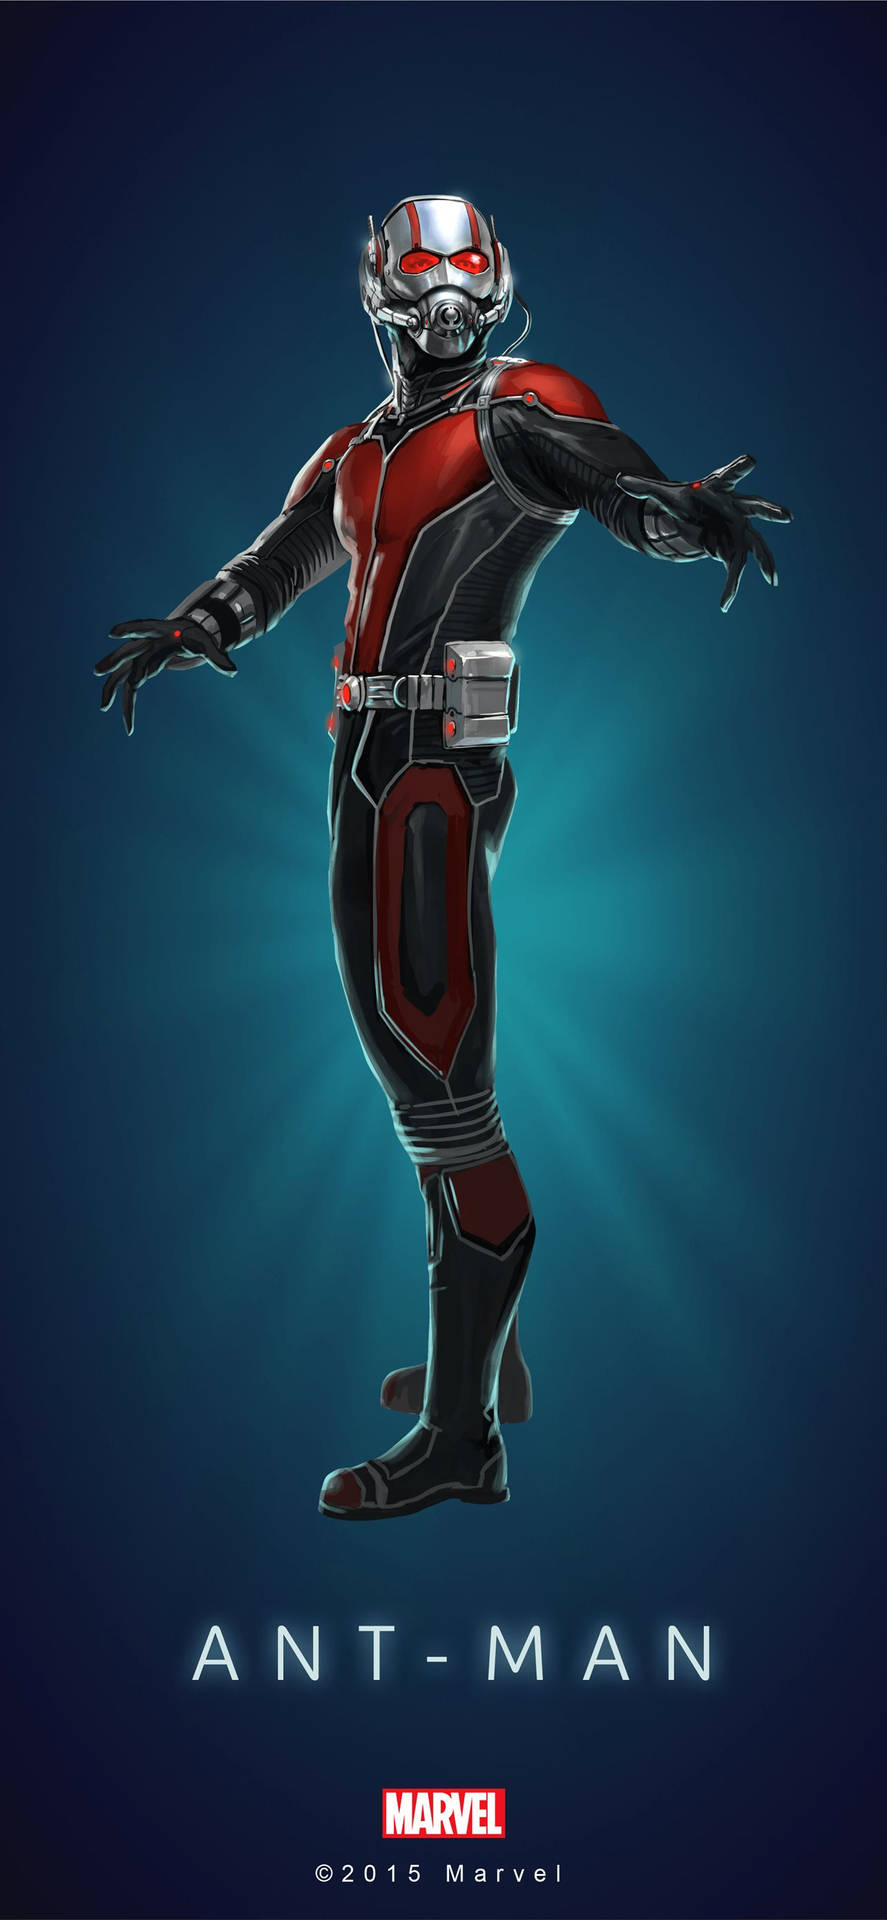 Ant-man Poster 4k Marvel Iphone Background